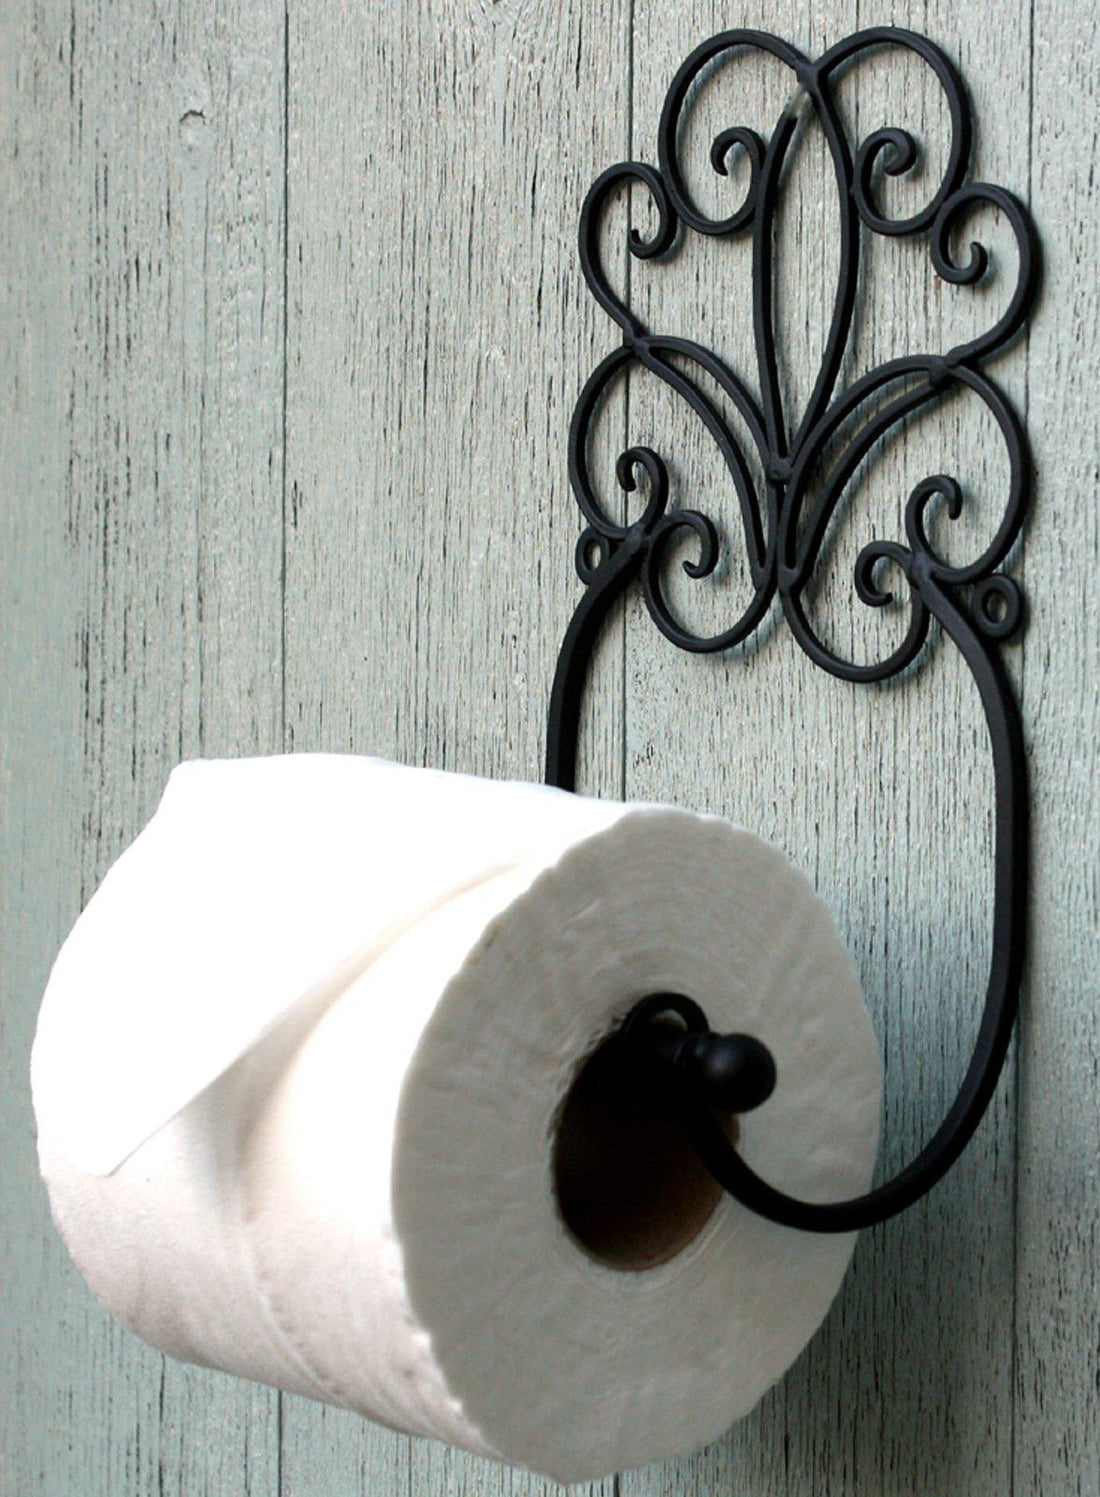 Black Scroll Wall Mounted Toilet Roll Holder - £12.99 - Bathroom 